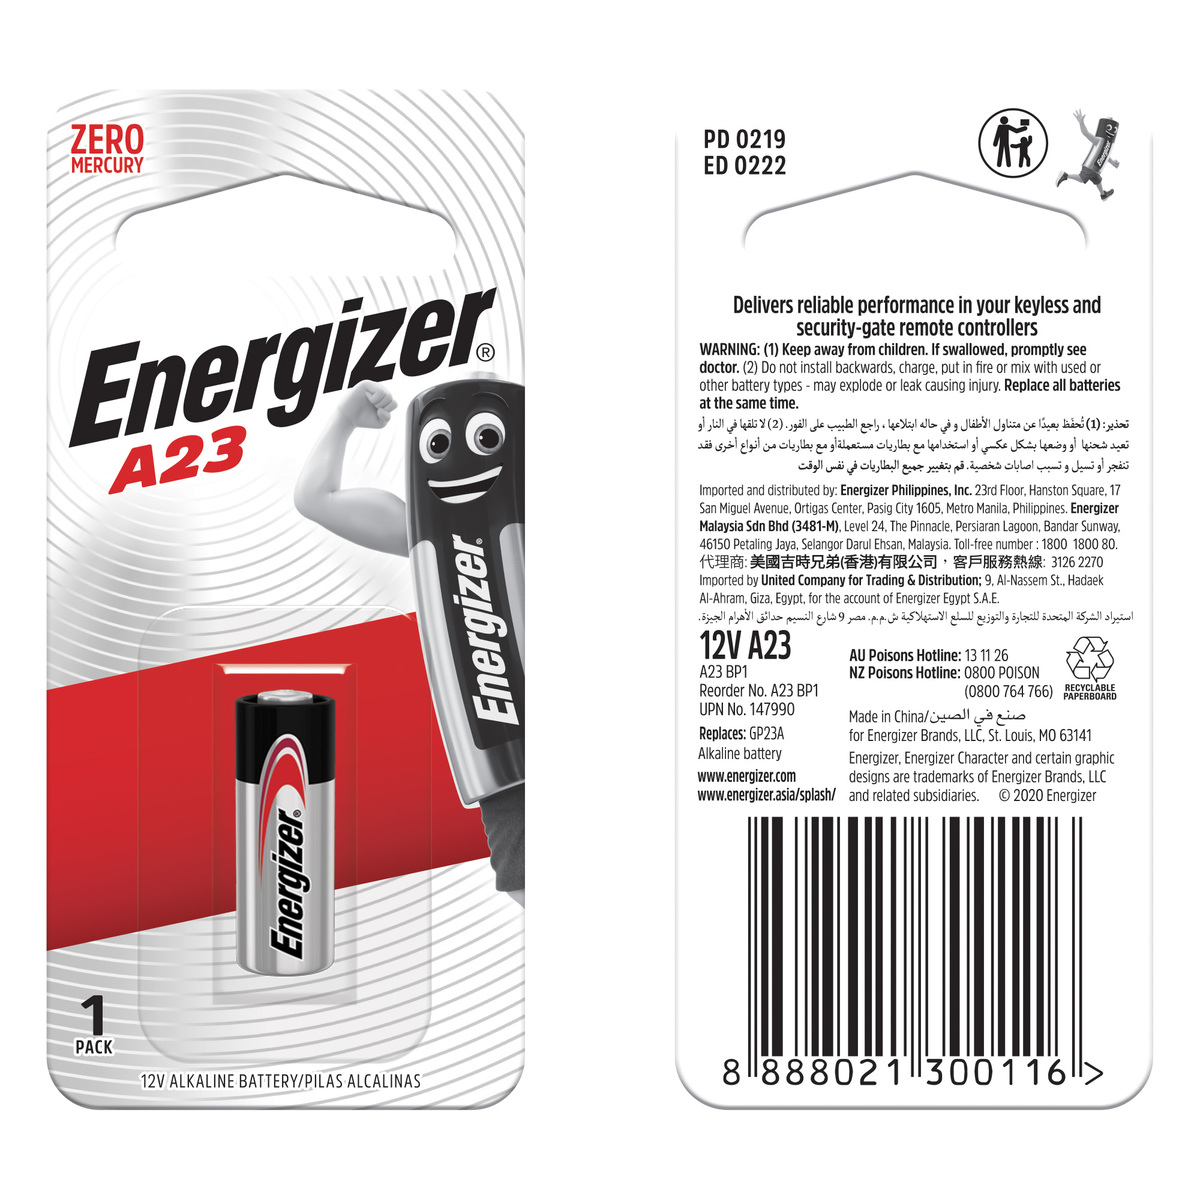 Energizer A23 Alkaline Battery, 12 V, 1 Pcs, A23BP1